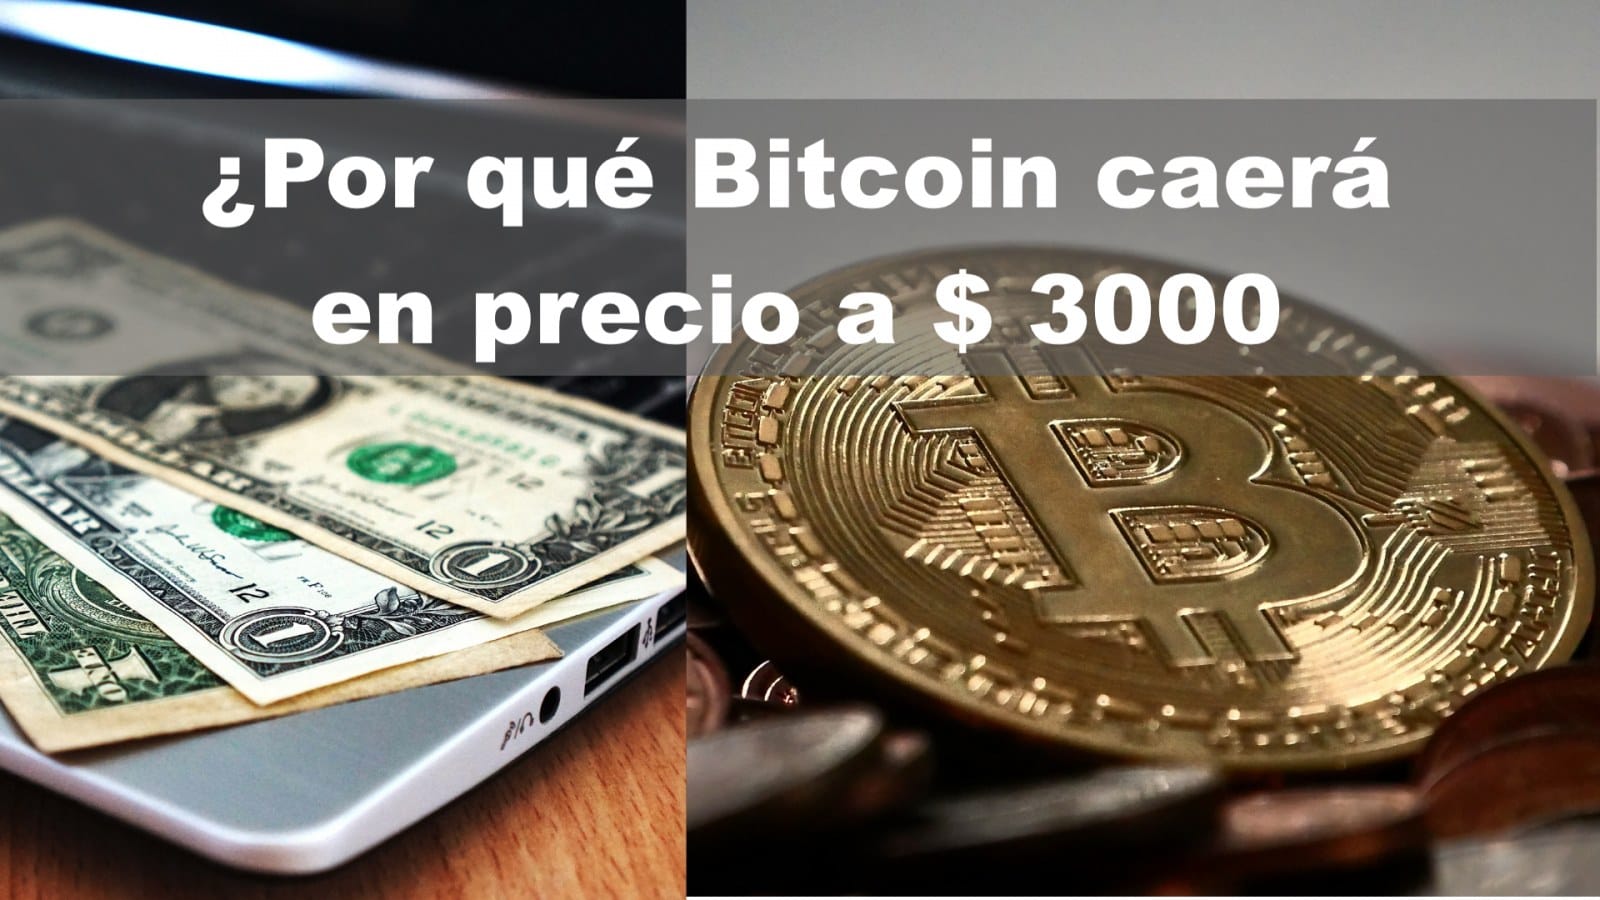 Bitcoin Caera. Cripto-mineria.com